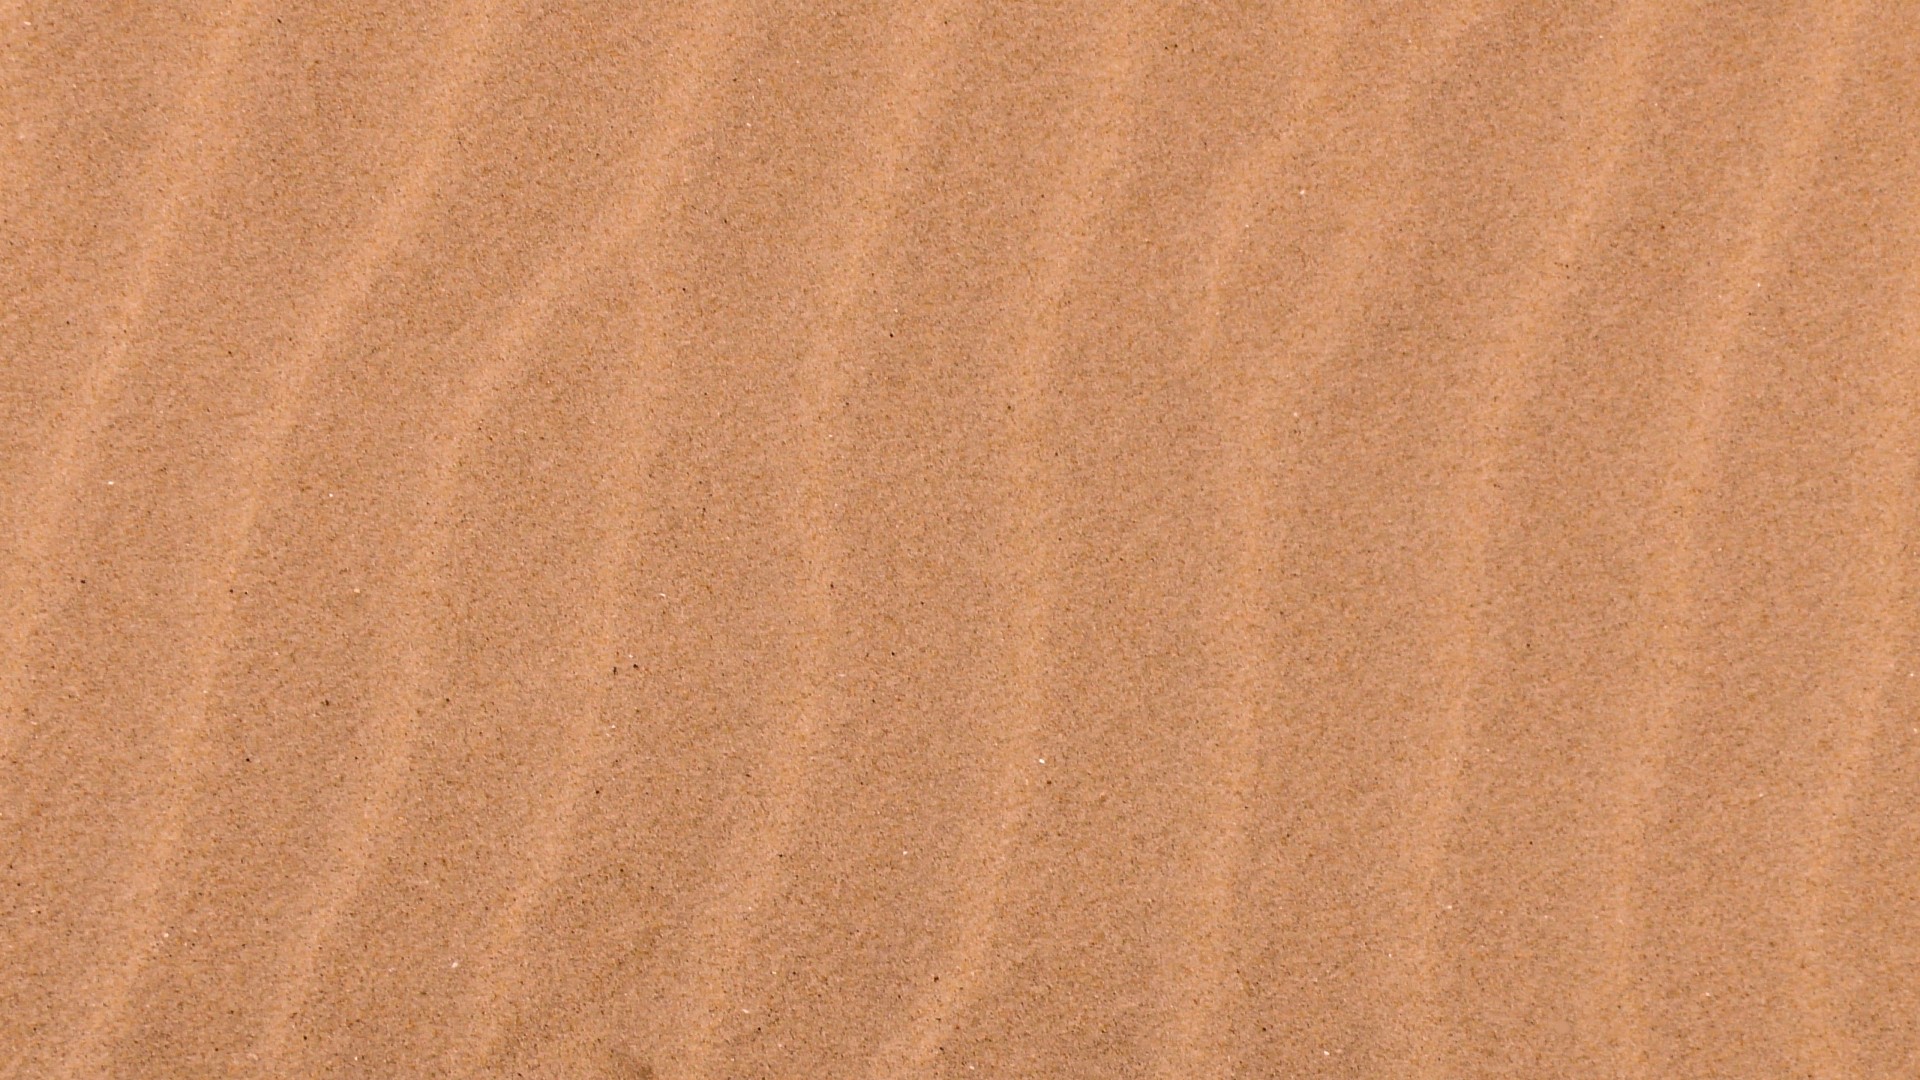 Ripples Of Sand